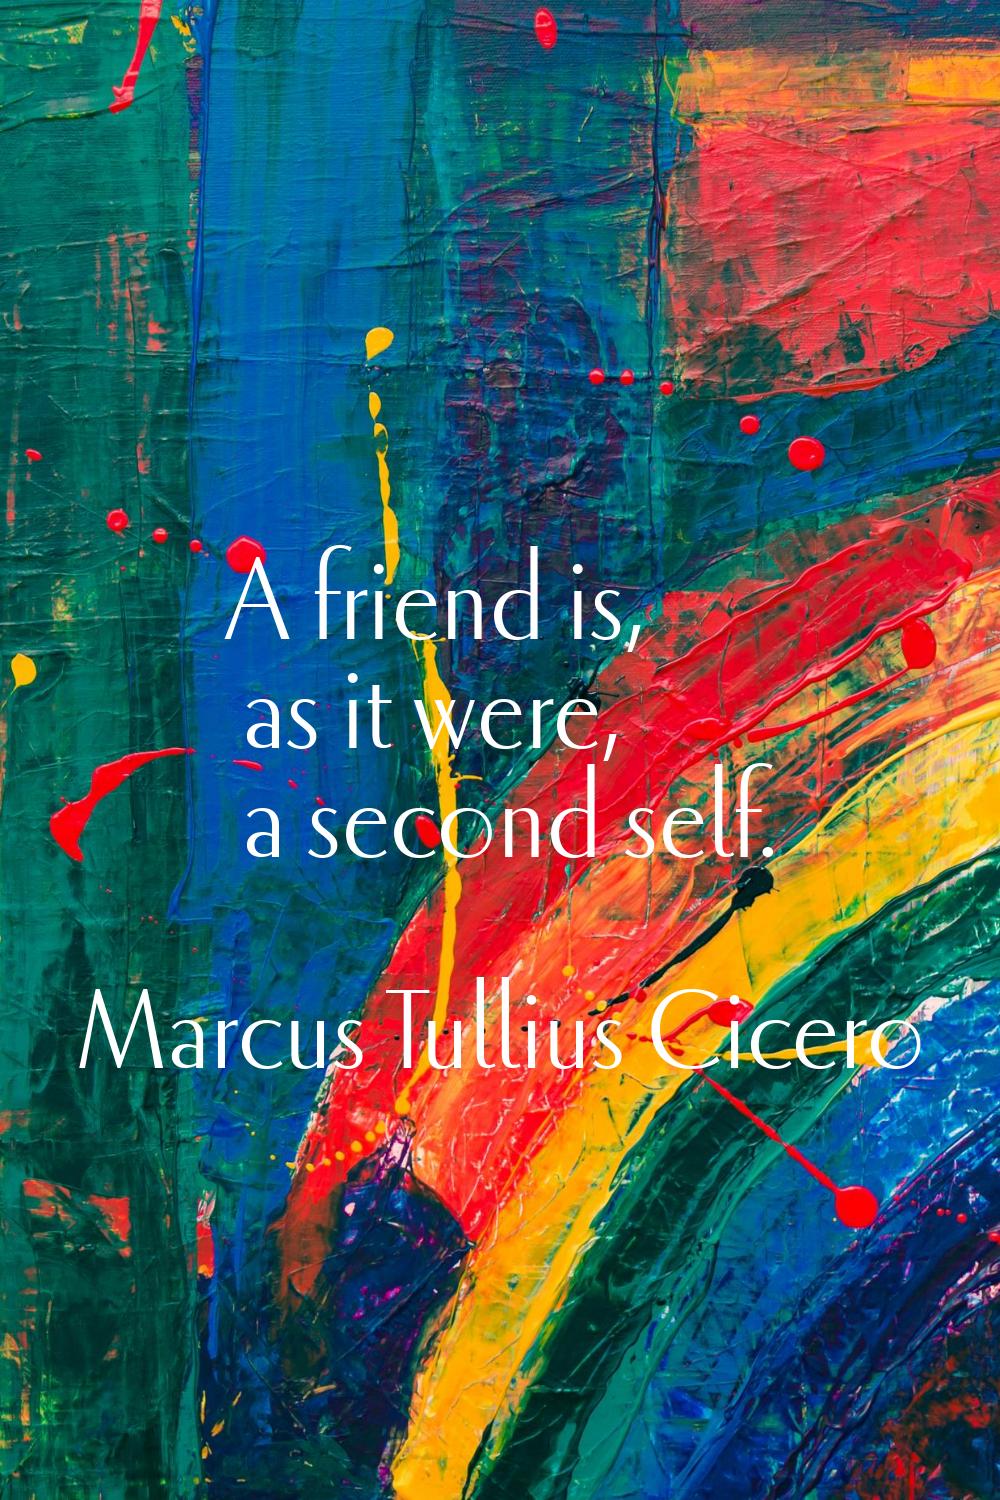 A friend is, as it were, a second self.